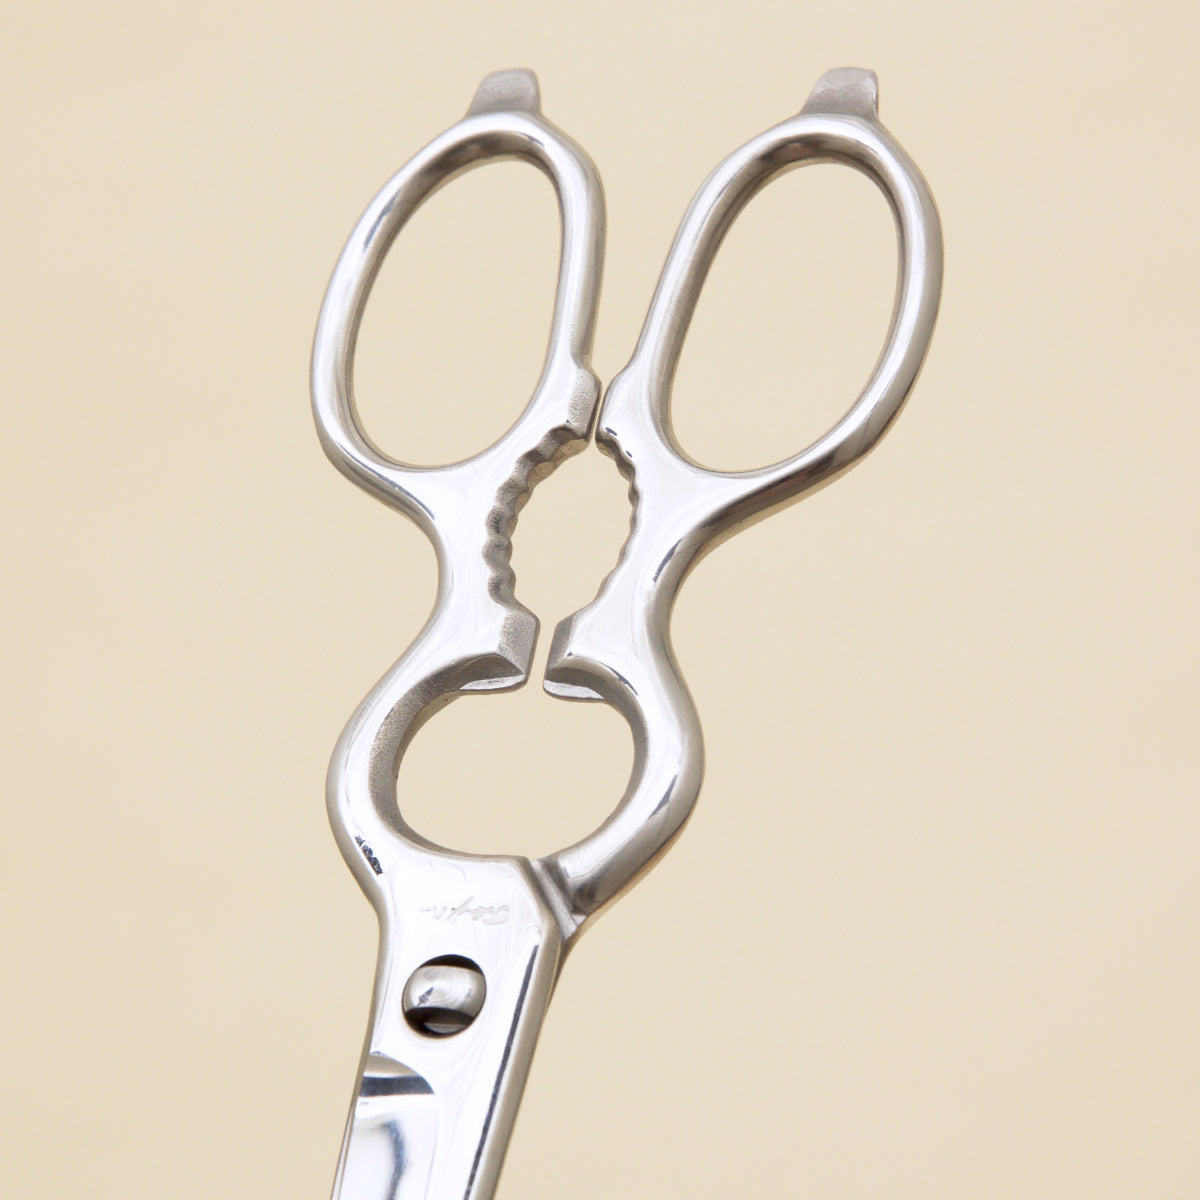 Treasure Gurus All-Purpose Kitchen Scissors